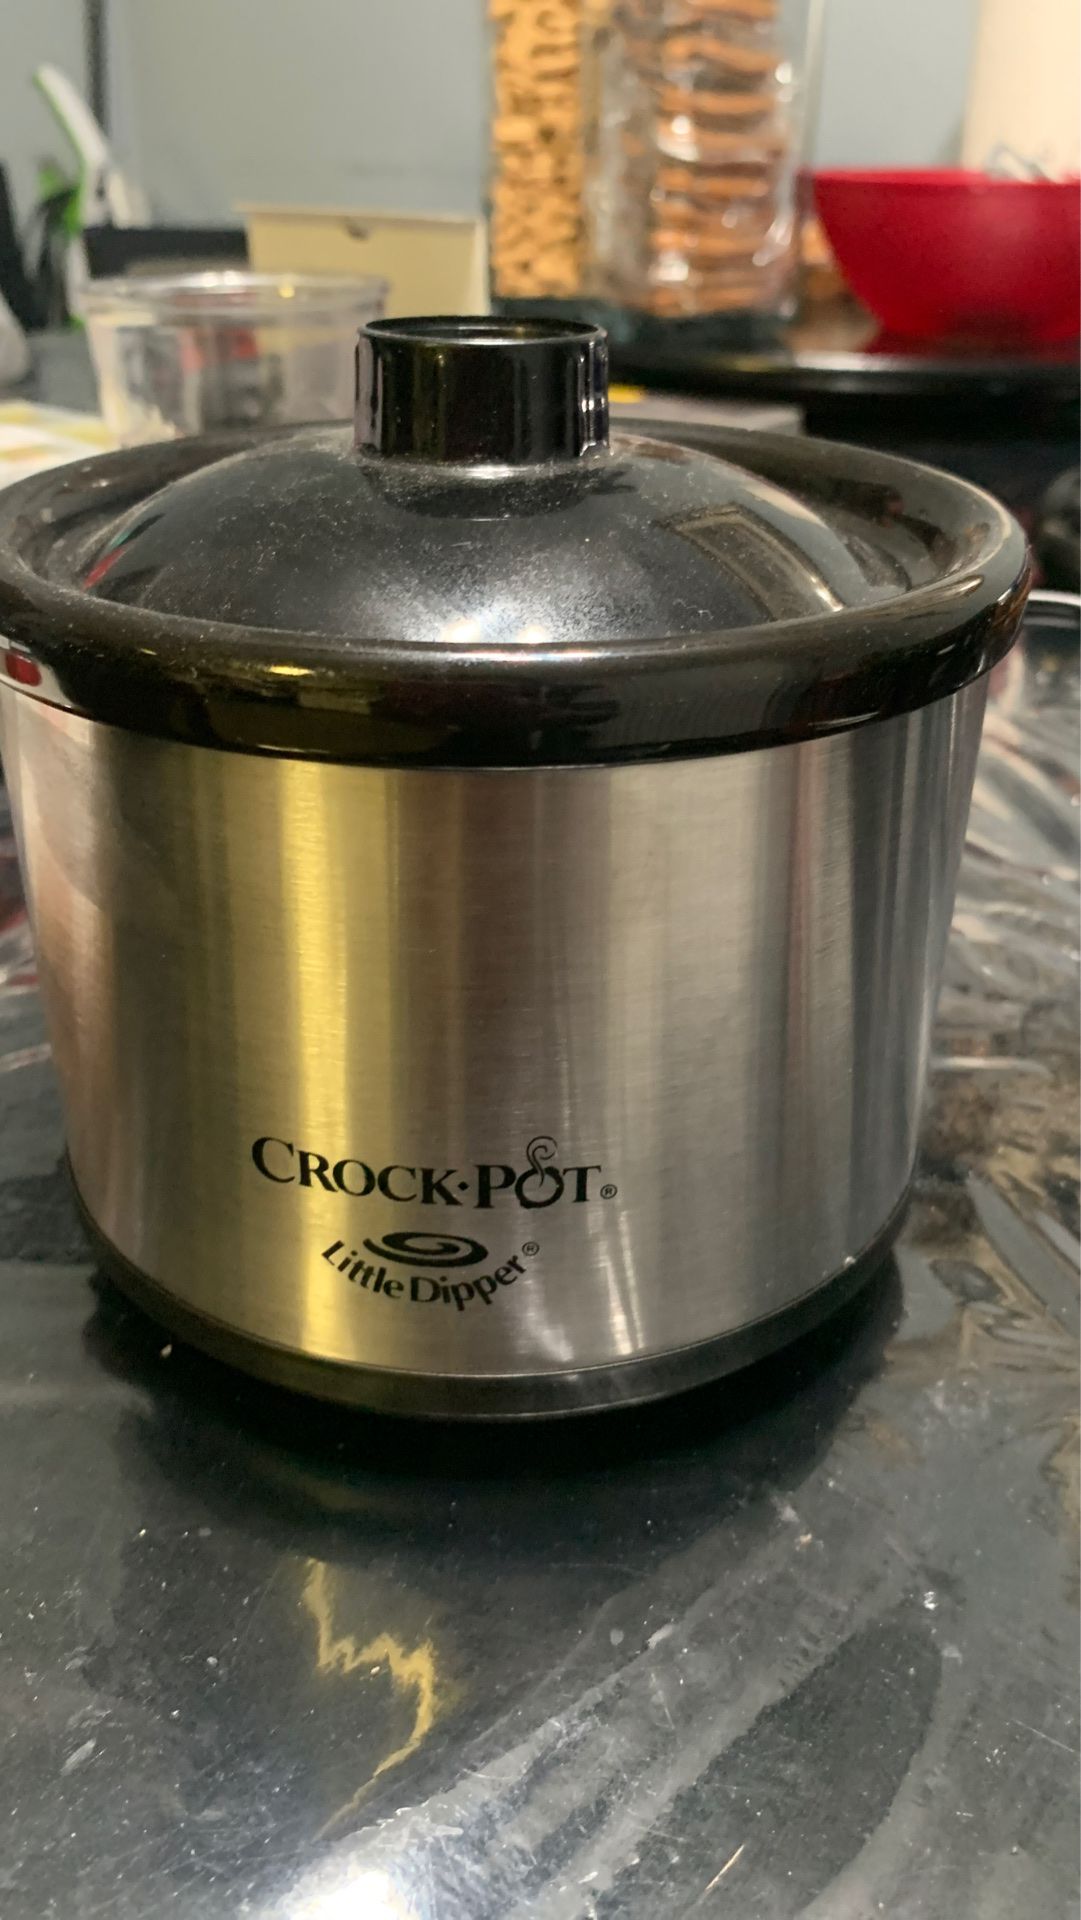 Little crock pot